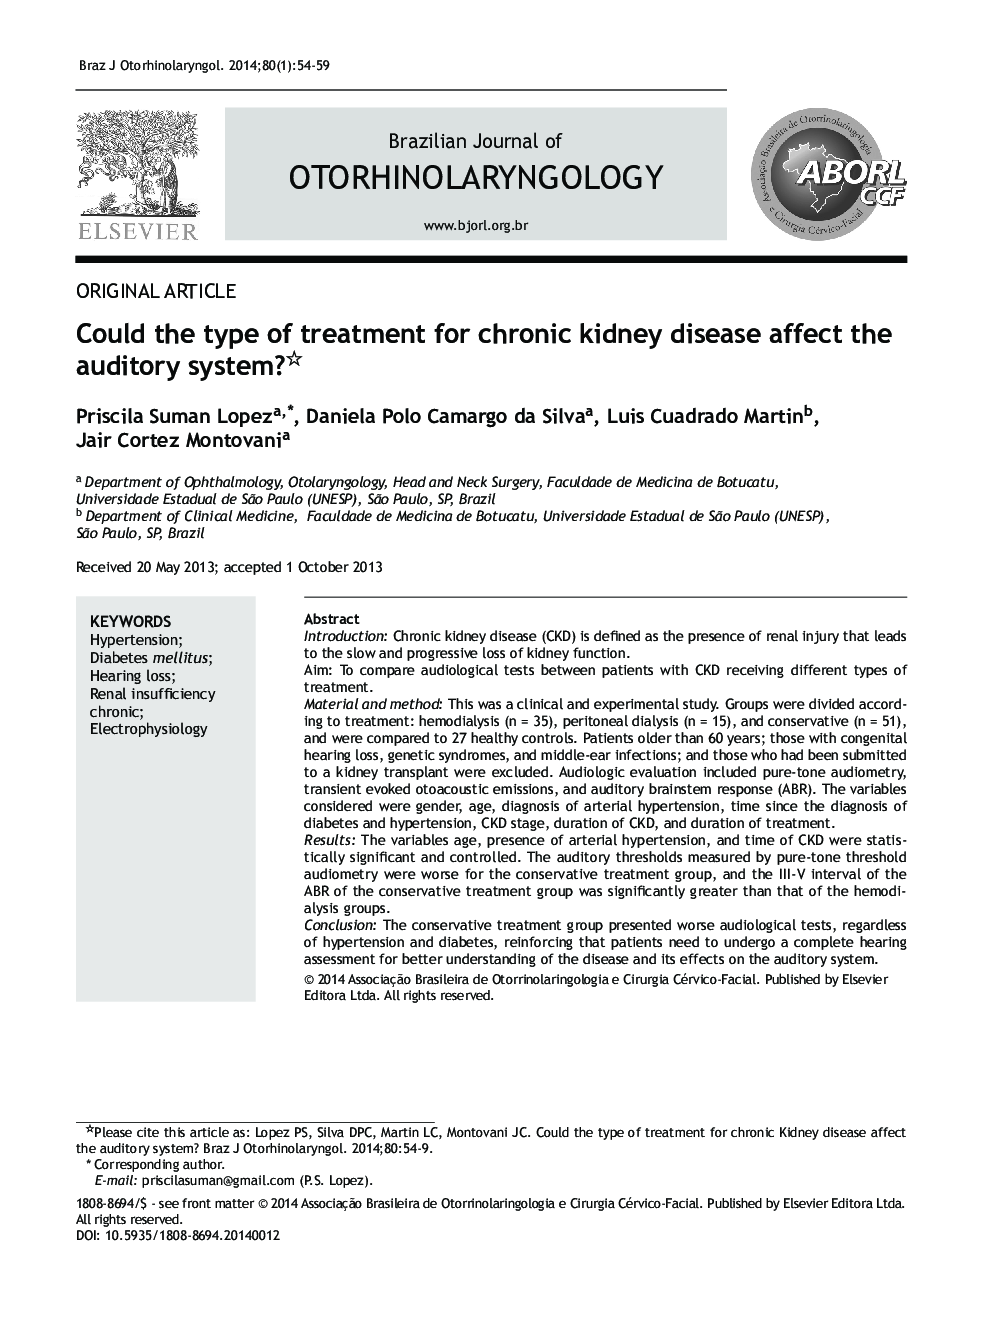 Could the type of treatment for chronic kidney disease affect the auditory system?: O tratamento da doença renal crônica pode afetar a audição?